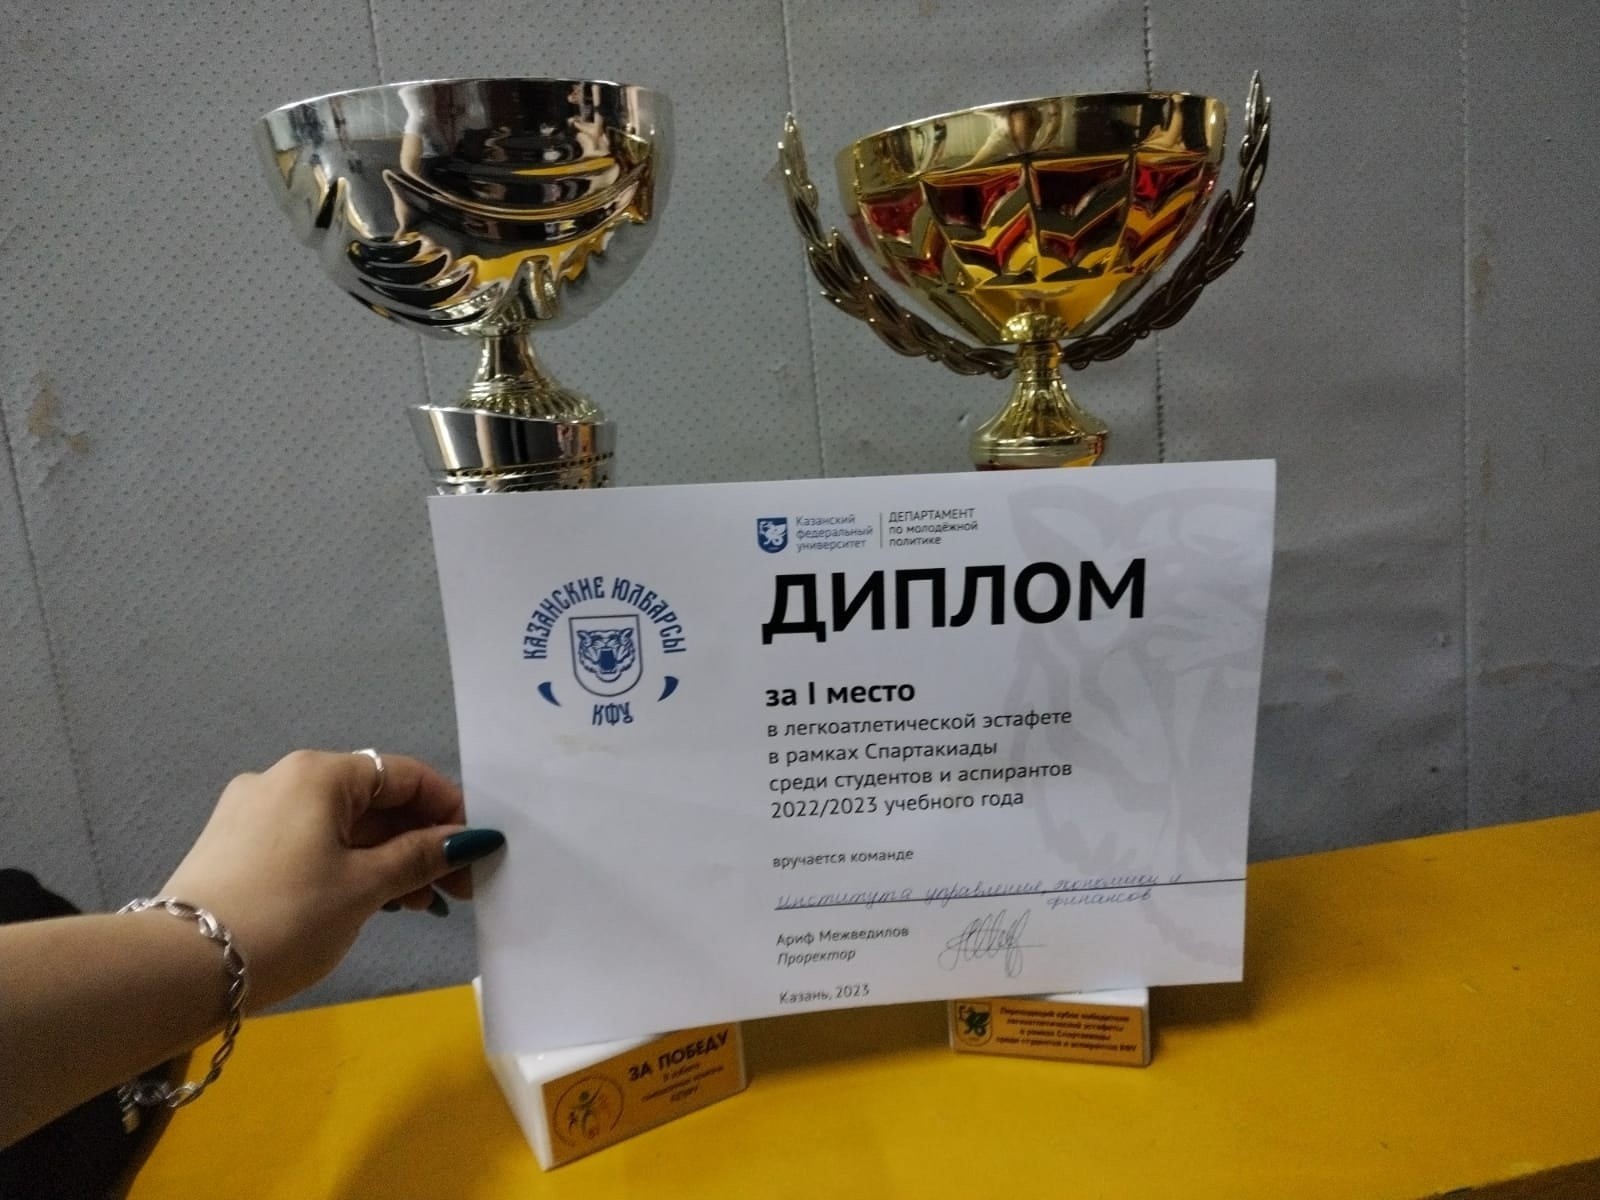 команда ИУЭиФ заняла 1 место в легкоатлетической эстафете среди институтов КФУ